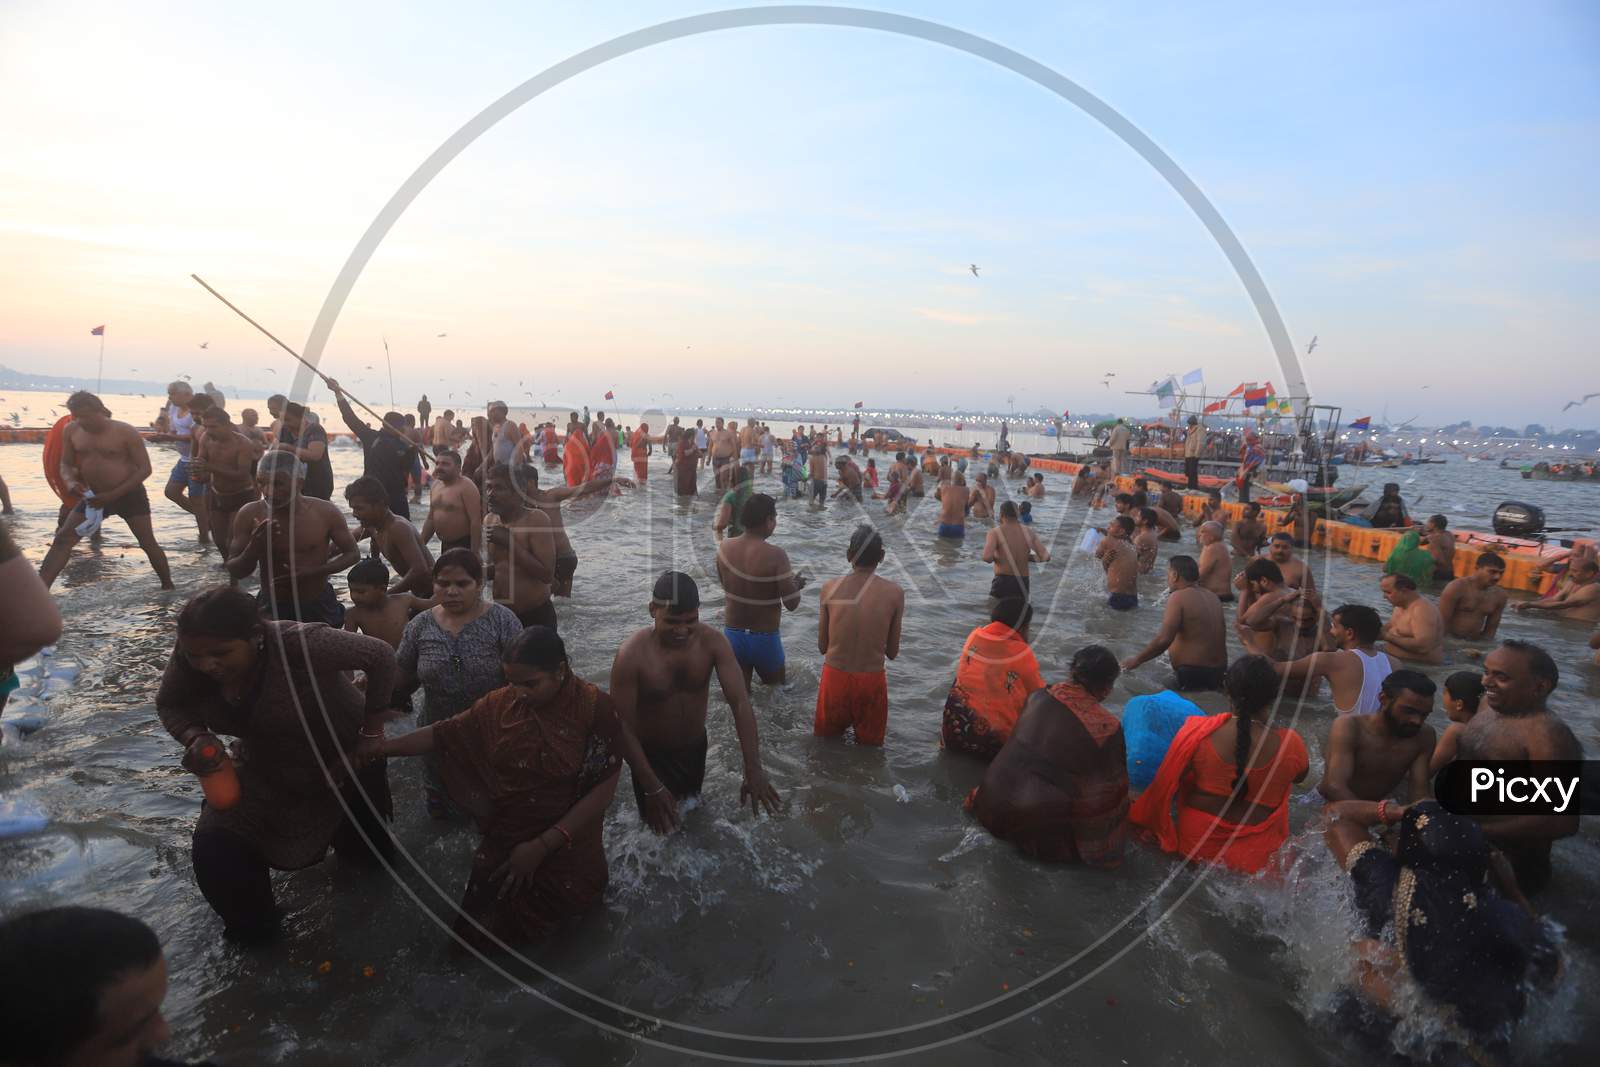 Image Of Crowd Of Hindu Devotees And Sadhu Taking Holy Bath In Triveni